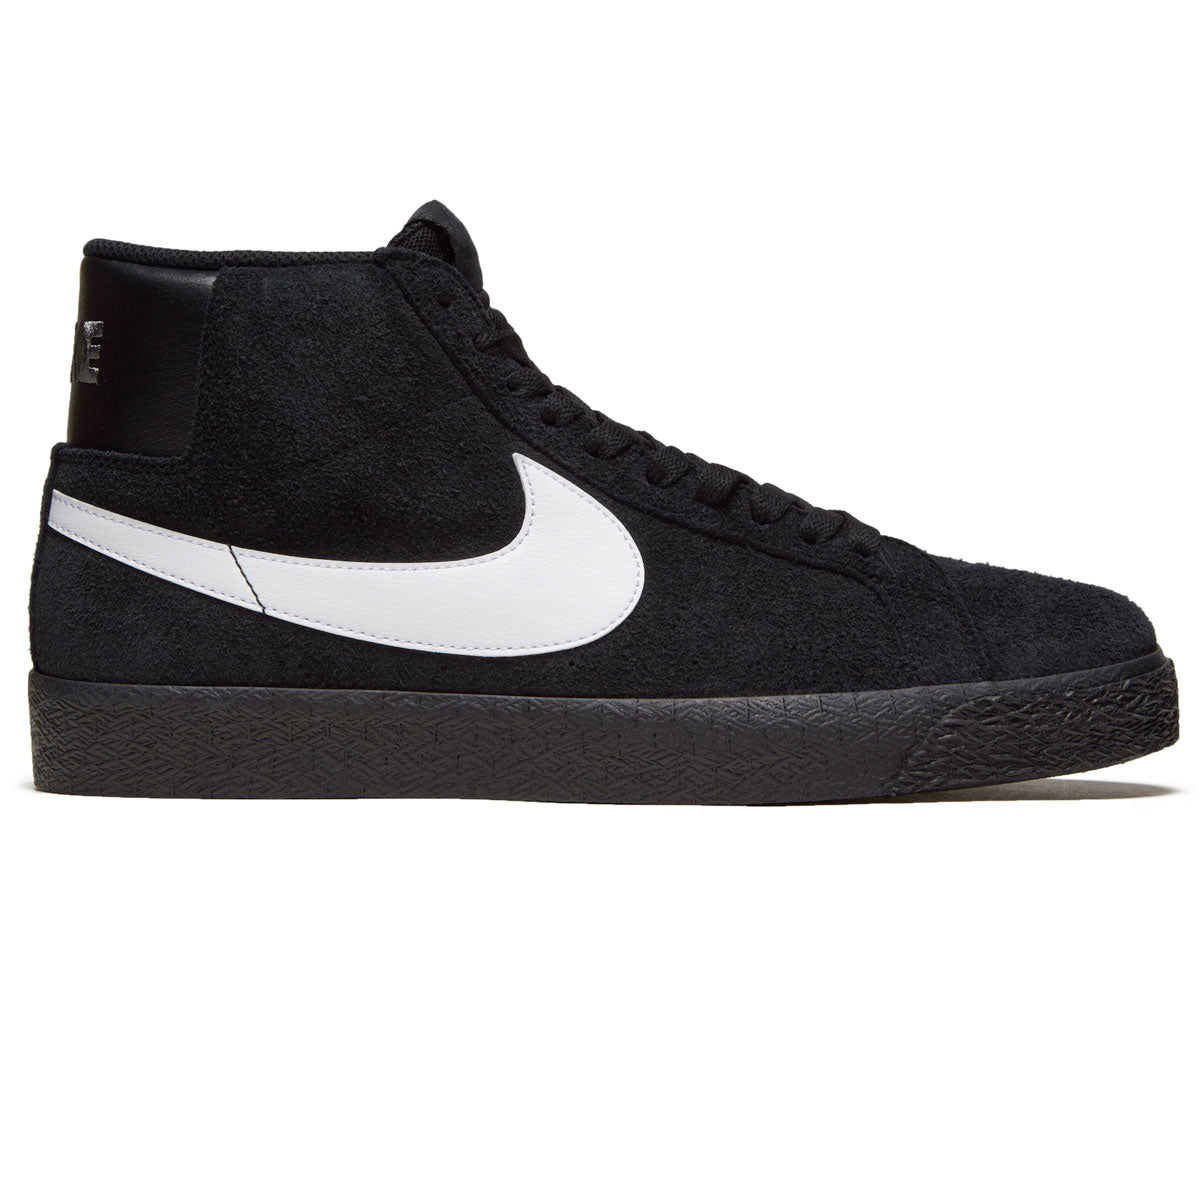 Nike SB Zoom Blazer Mid Shoes - Black/White/Black/Black image 1